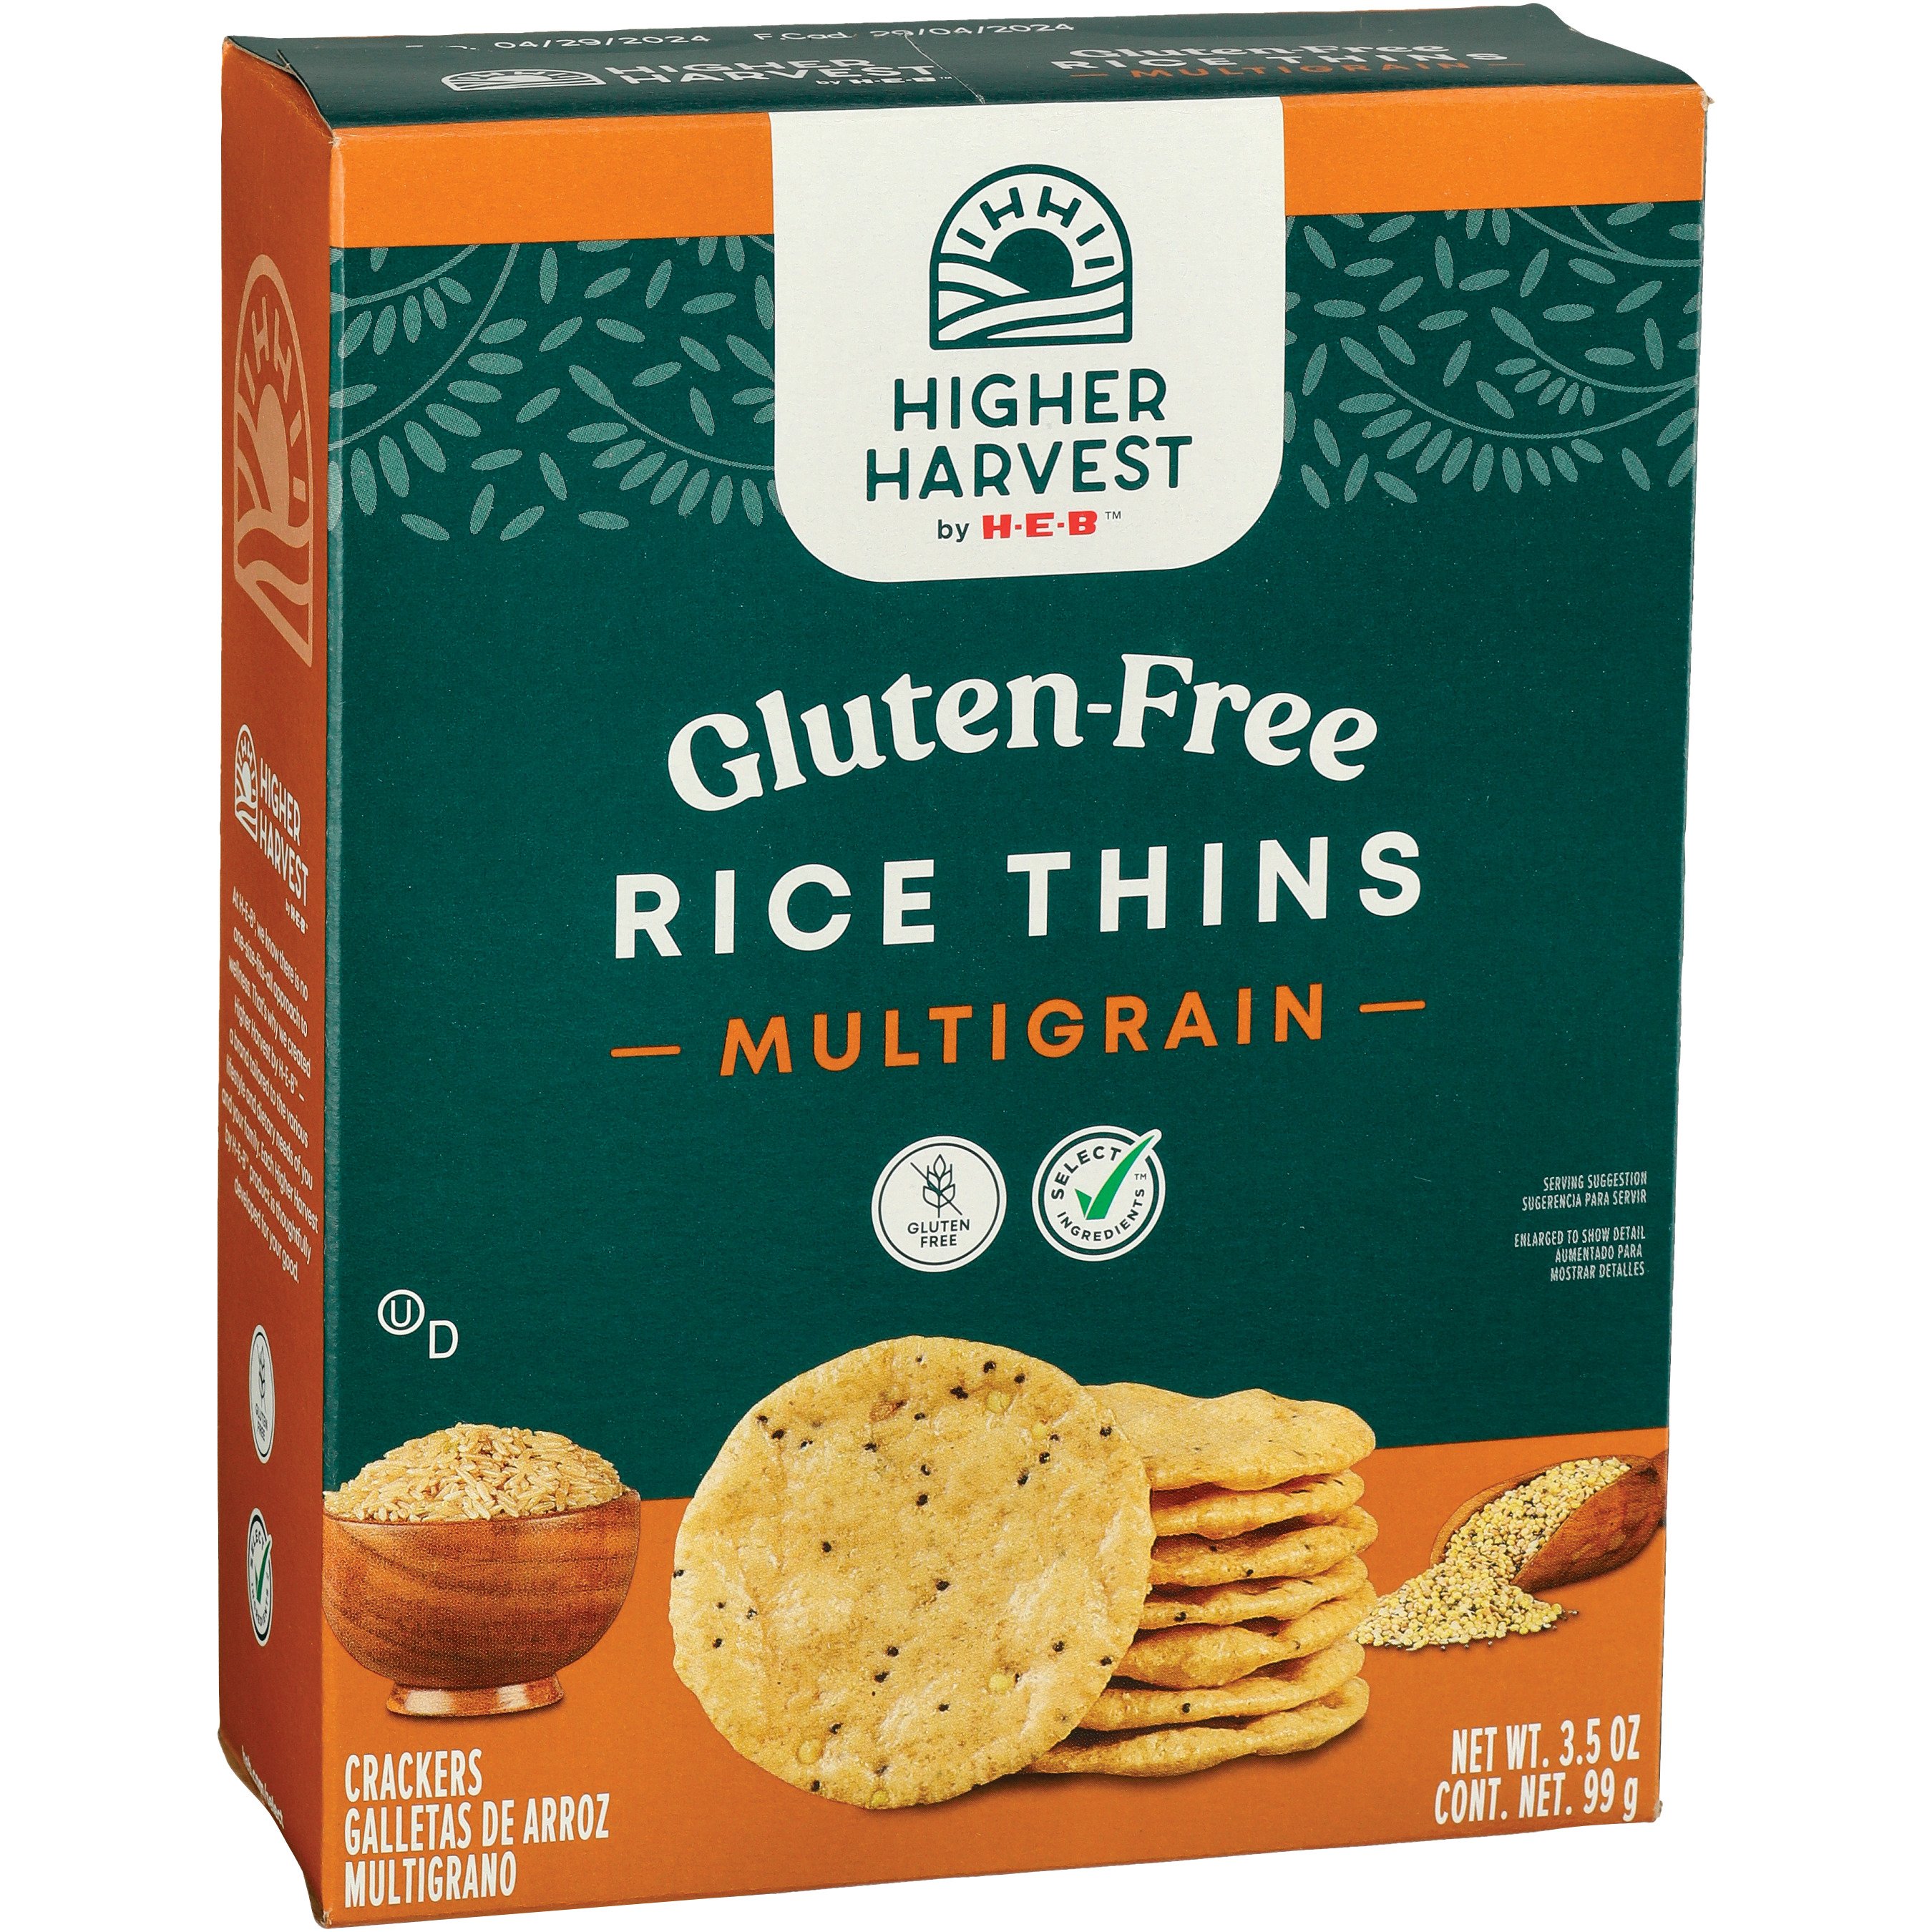 Good Thins Simply Veggie Blend Rice Snacks 3.5 Oz. Box